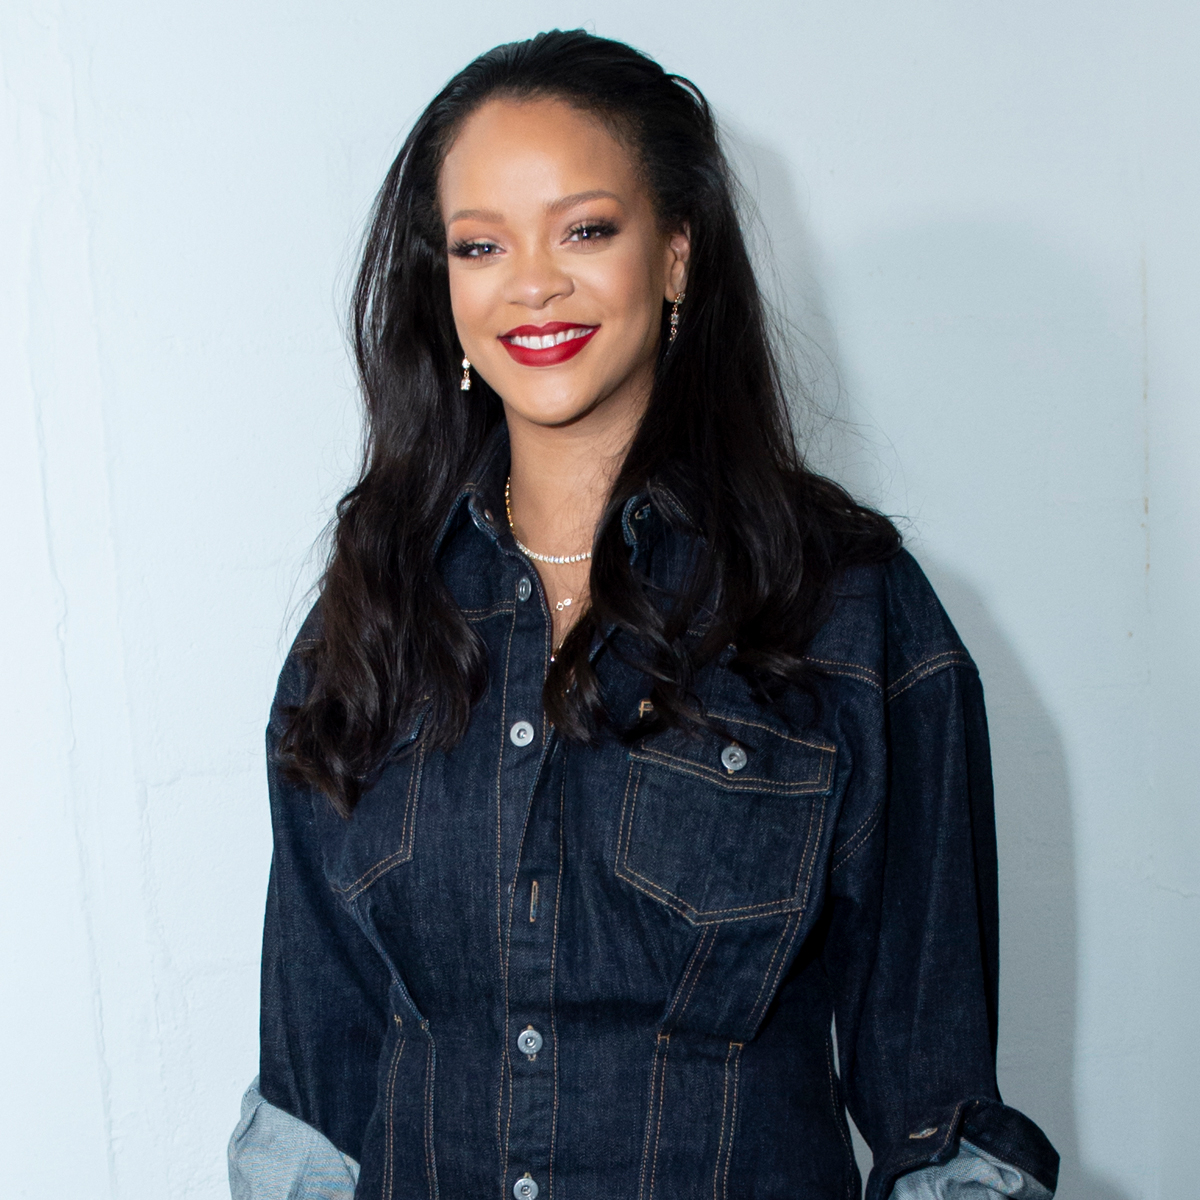 Butt Baring Leggings From Rihanna S Savage X Fenty Line Spark Social Media Debate E Online Forbes Talk